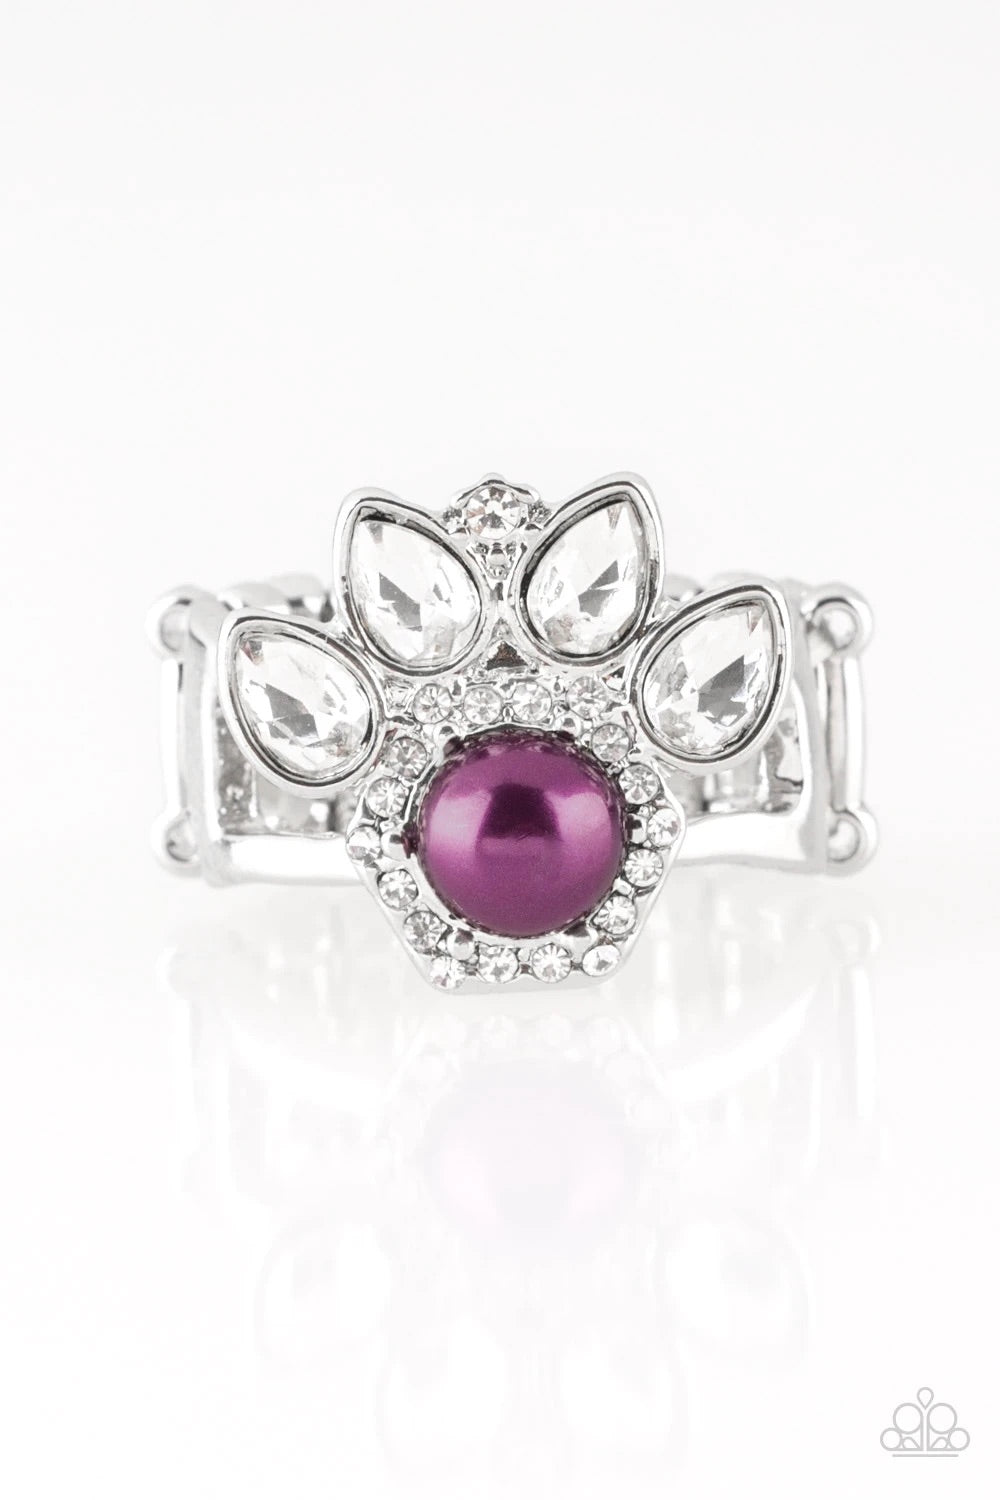 Crown Coronation - Purple Ring freeshipping - JewLz4u Gemstone Gallery